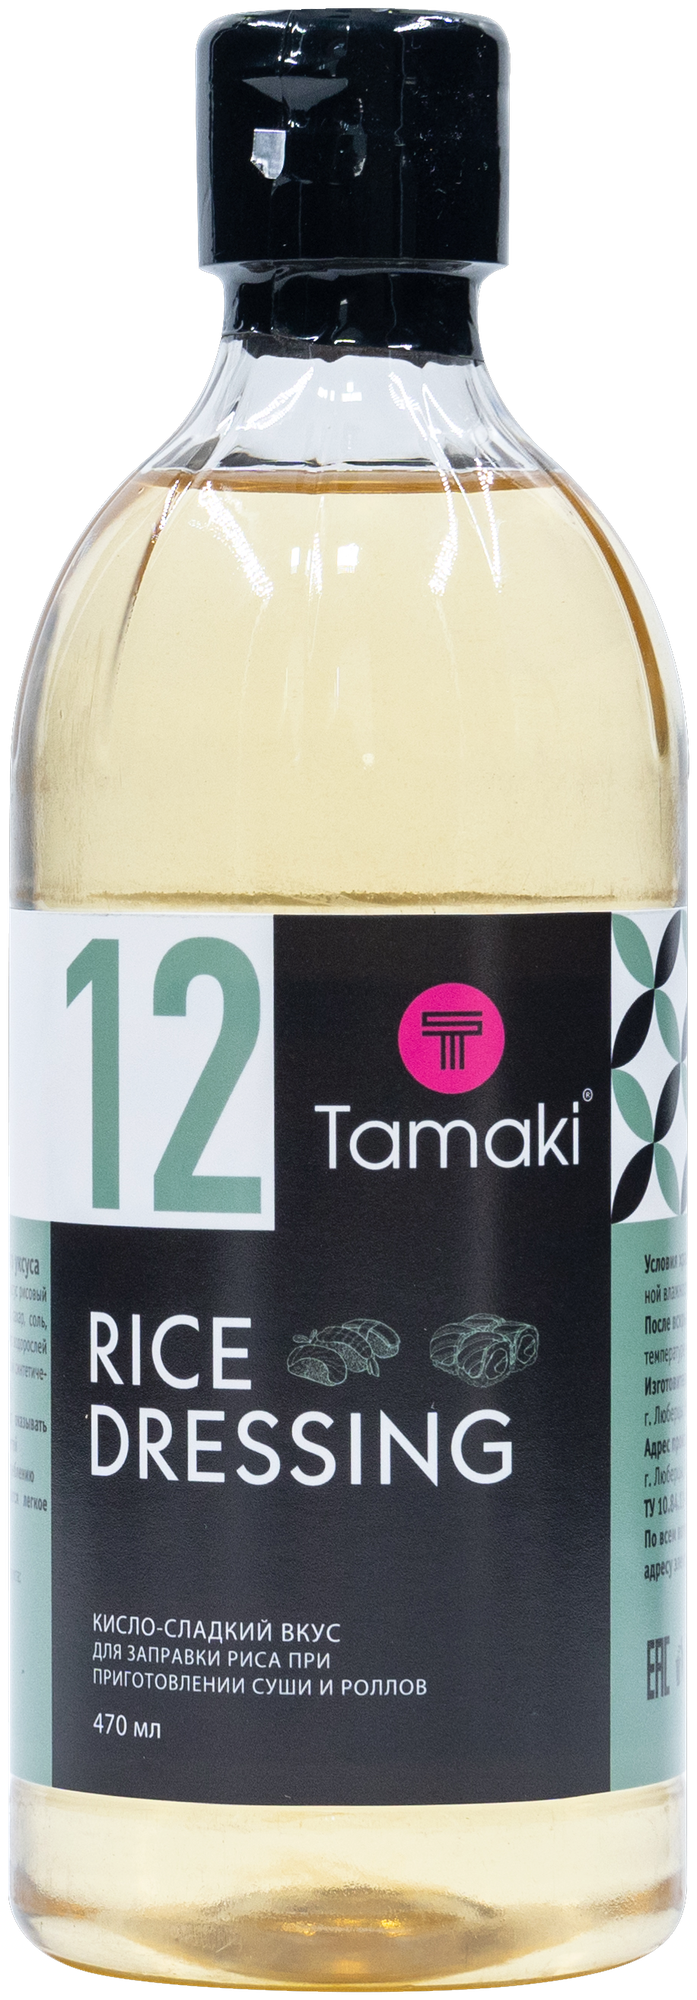 Заправка Tamaki для риса на основе рисового уксуса, 470 мл